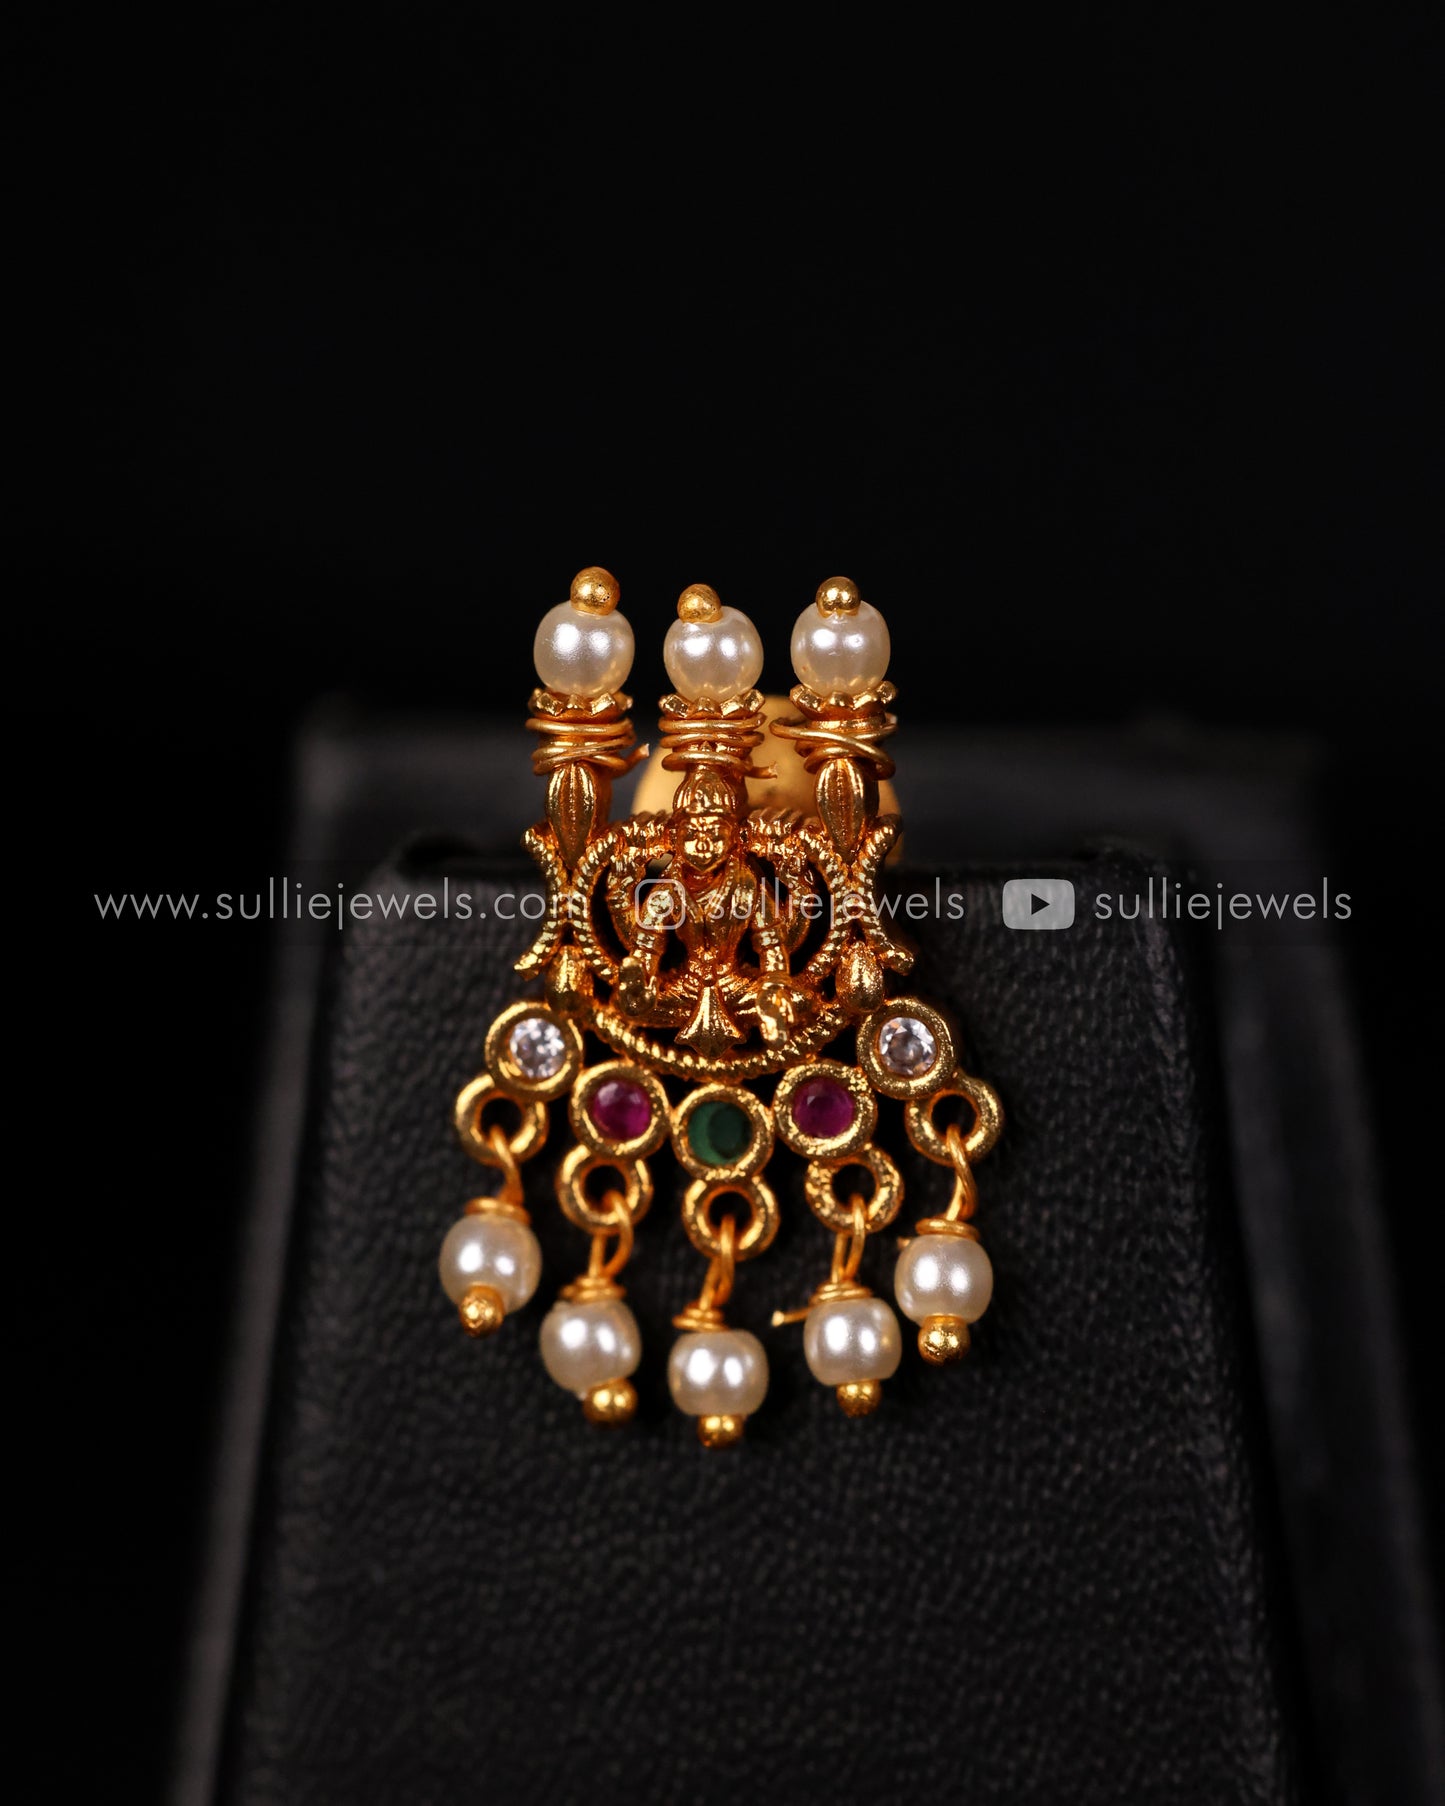 Detailed Lakshmi Design with Pearl drops Necklace Set